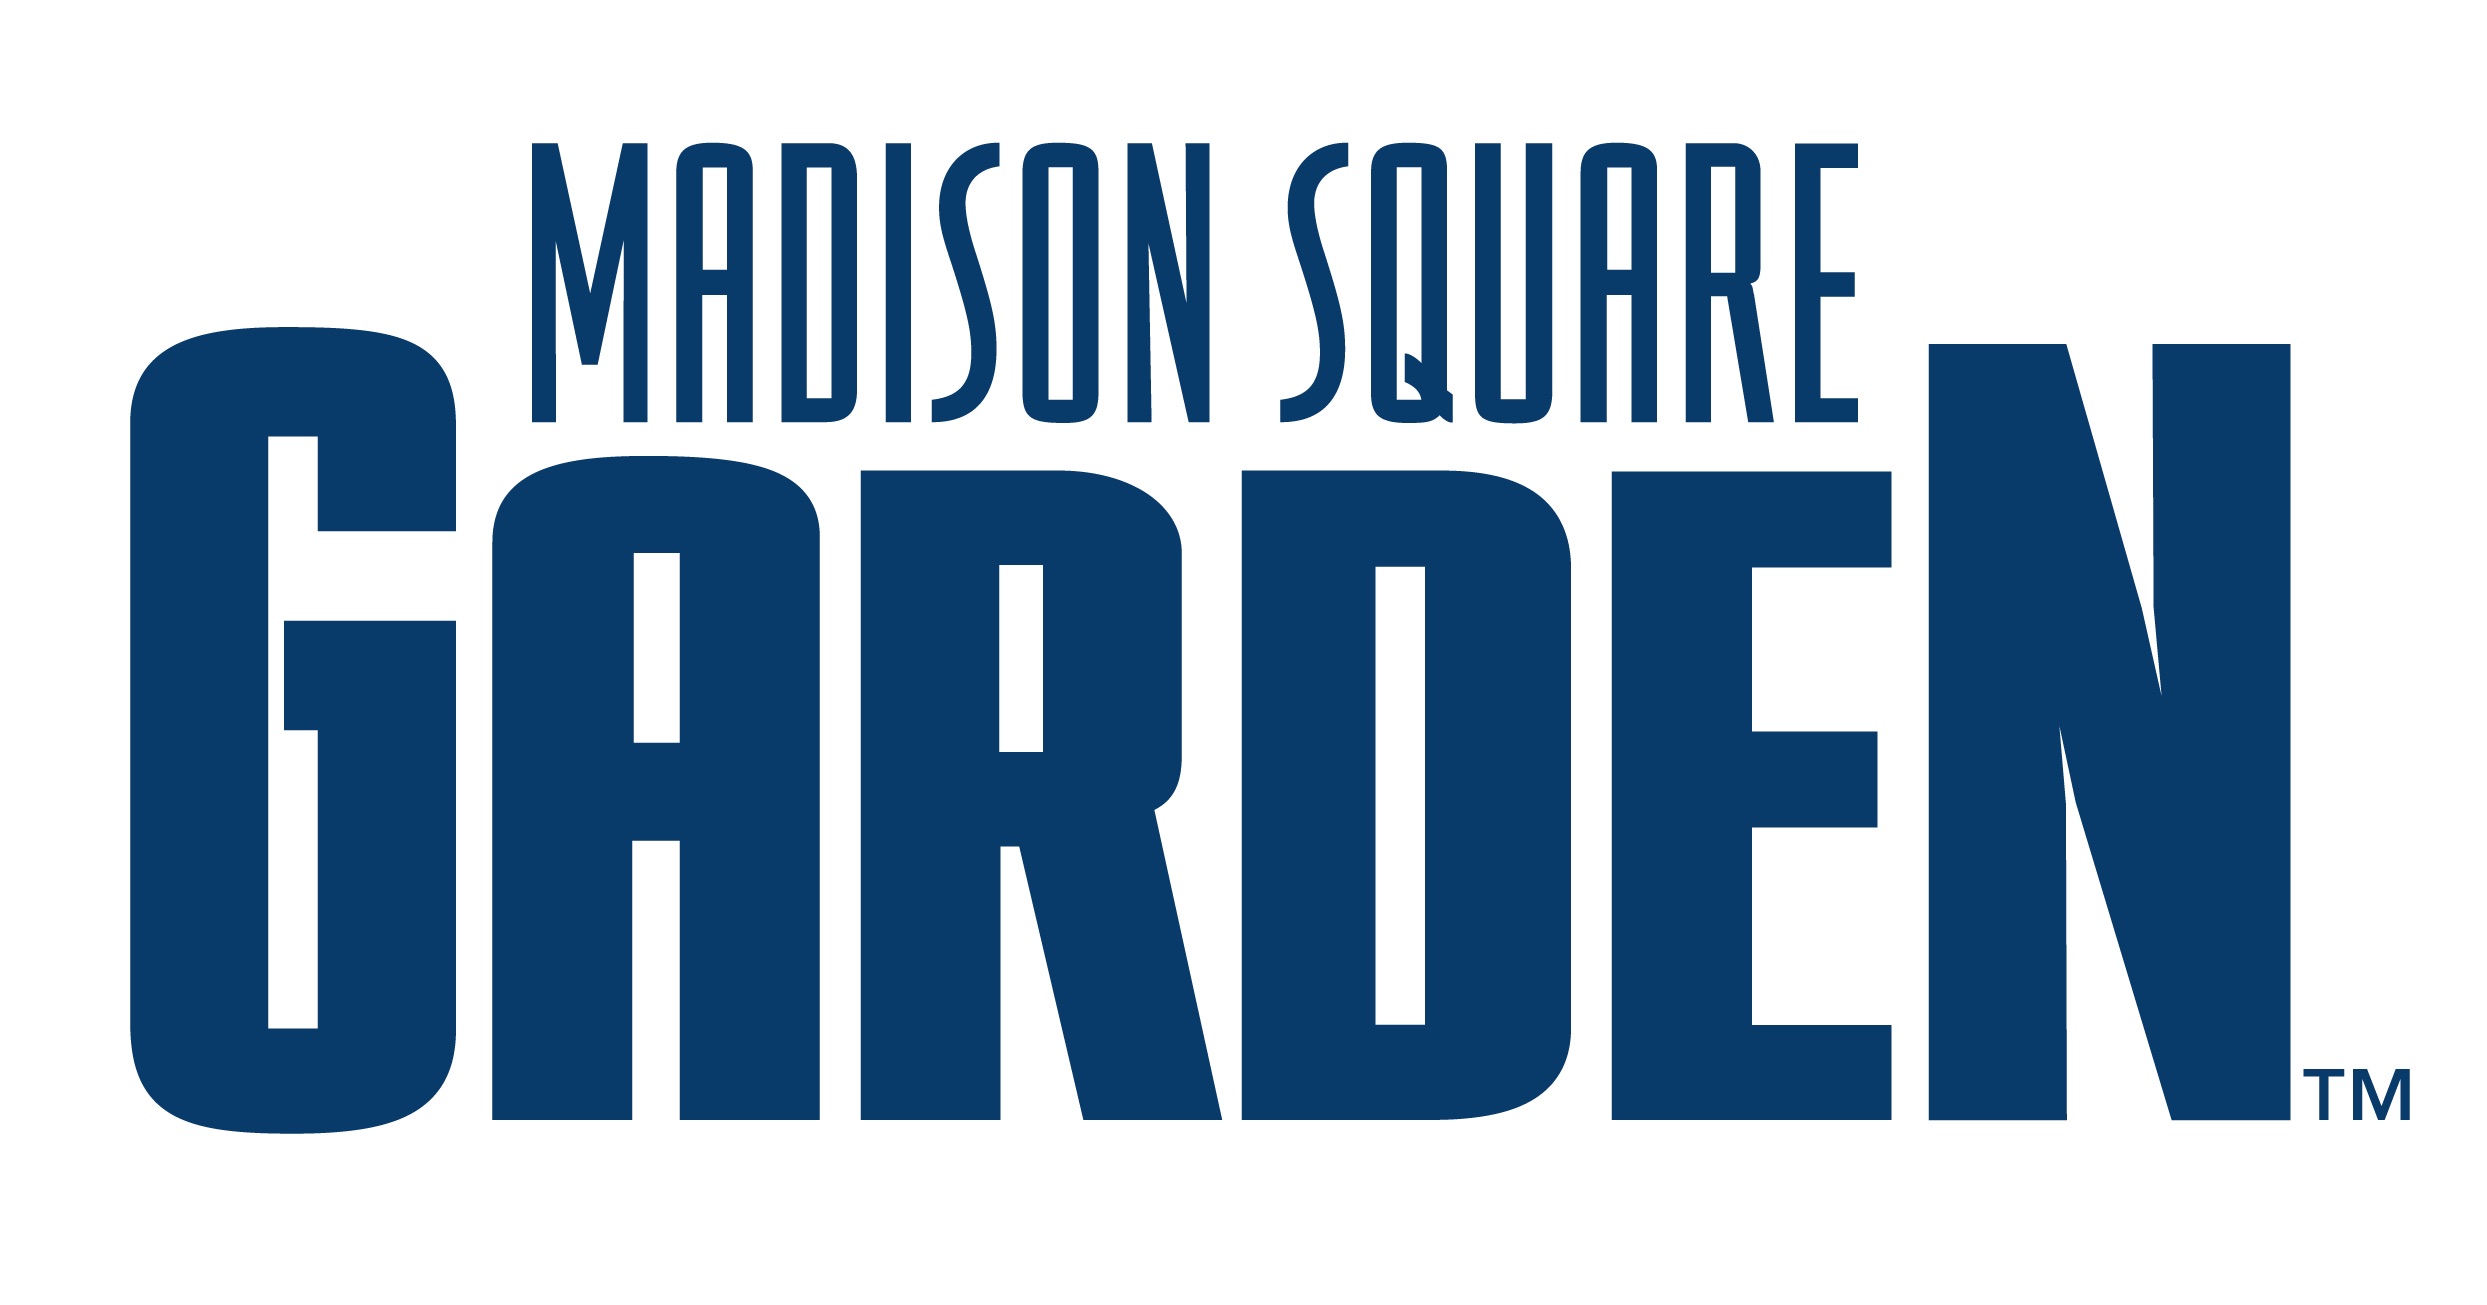 Madison Square Garden Company logo